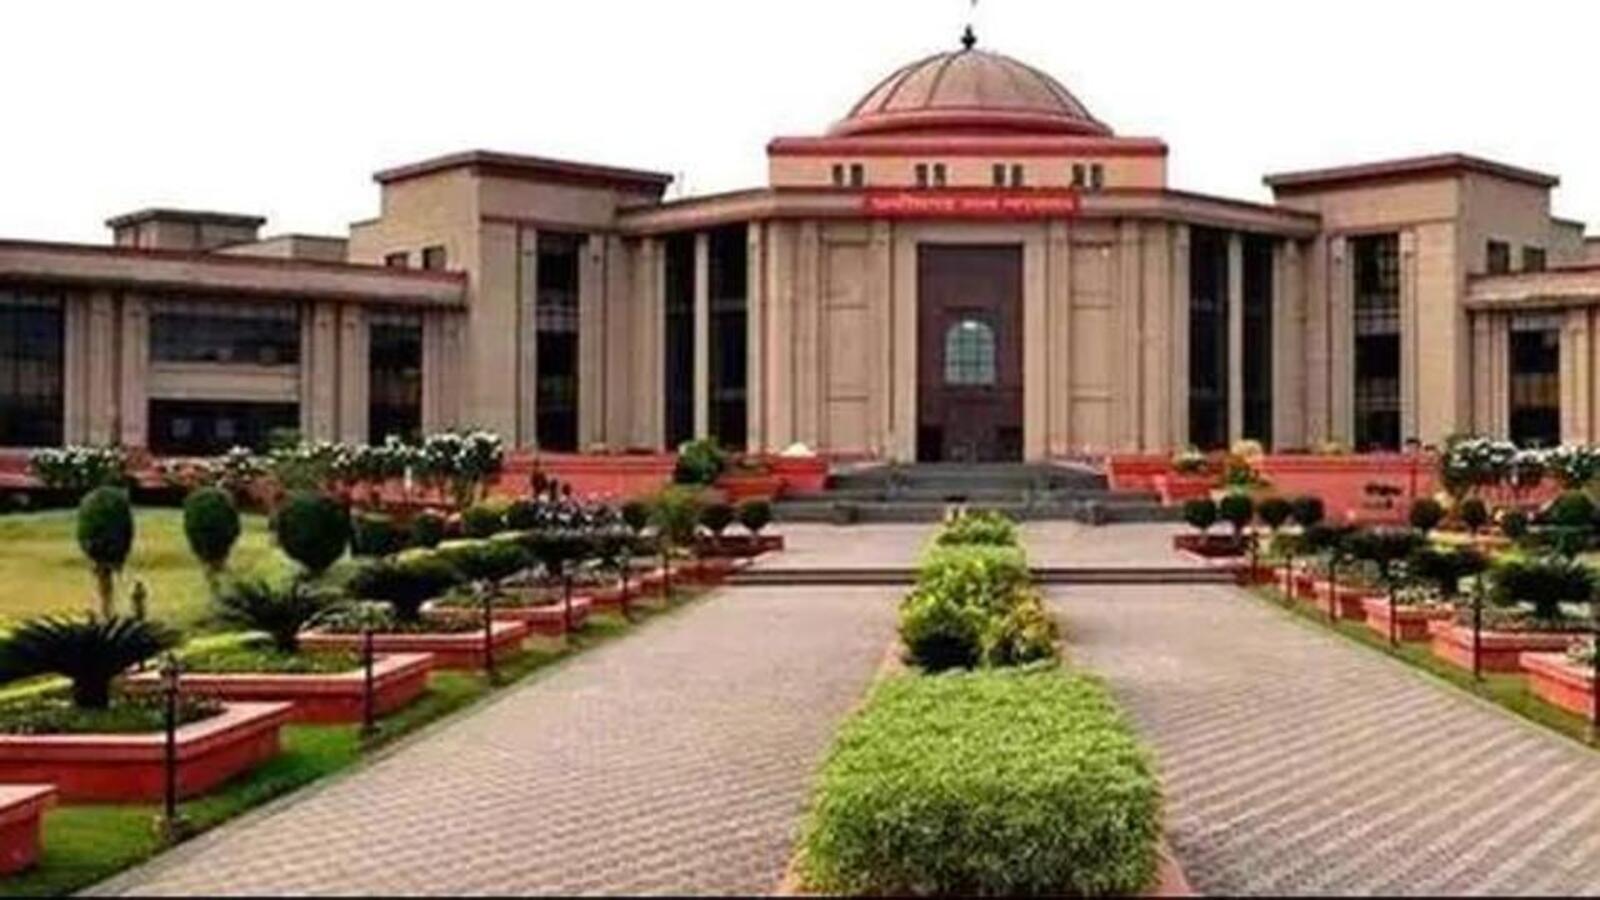 Chhattisgarh high court grants bail to suspended IPS officer GP Singh in DA case